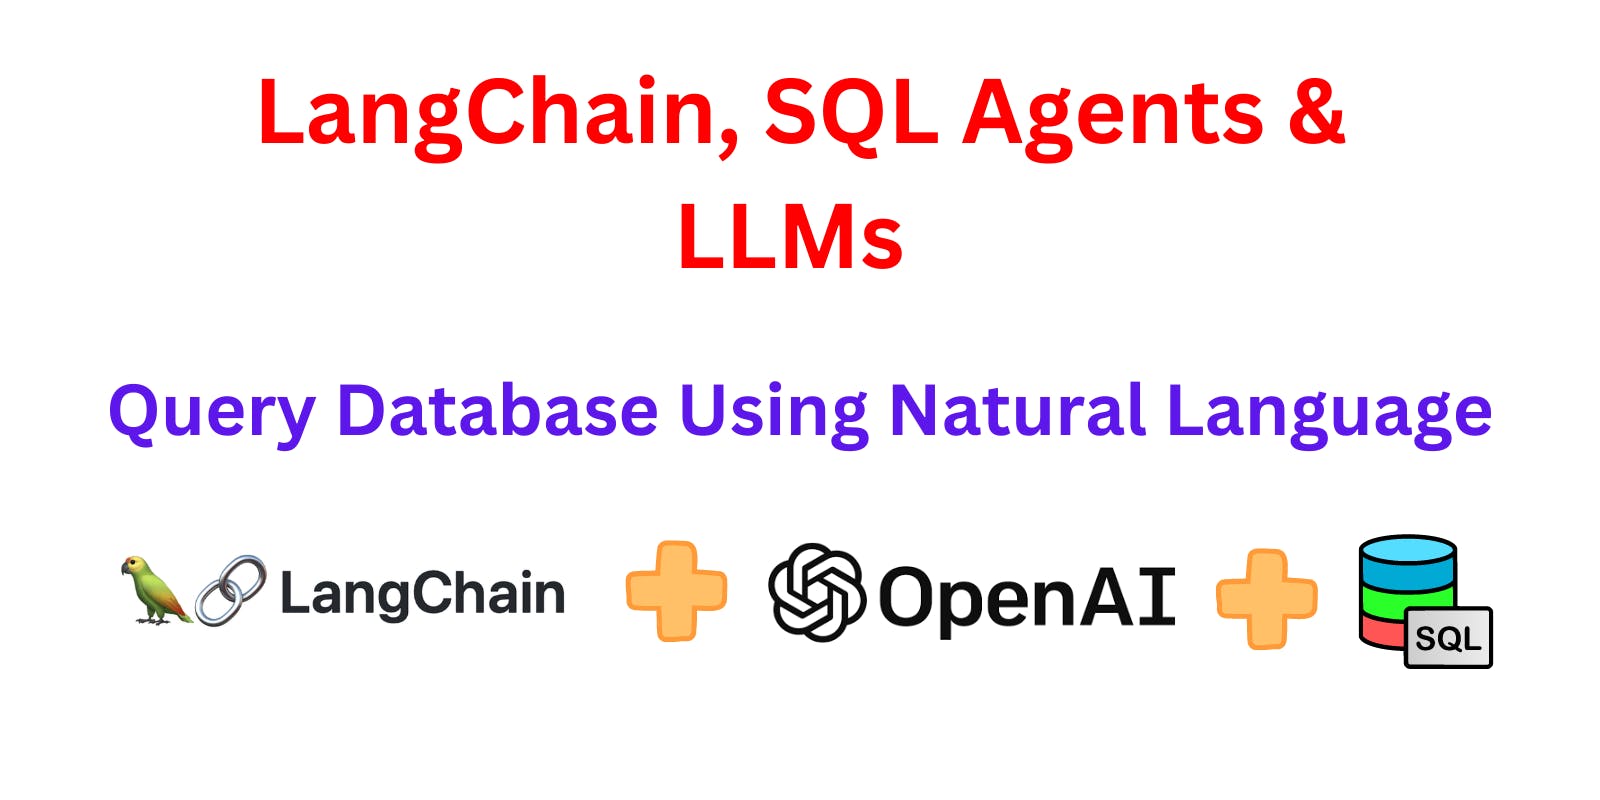 LangChain, SQL Agents & OpenAI LLMs: Query Database Using Natural Language